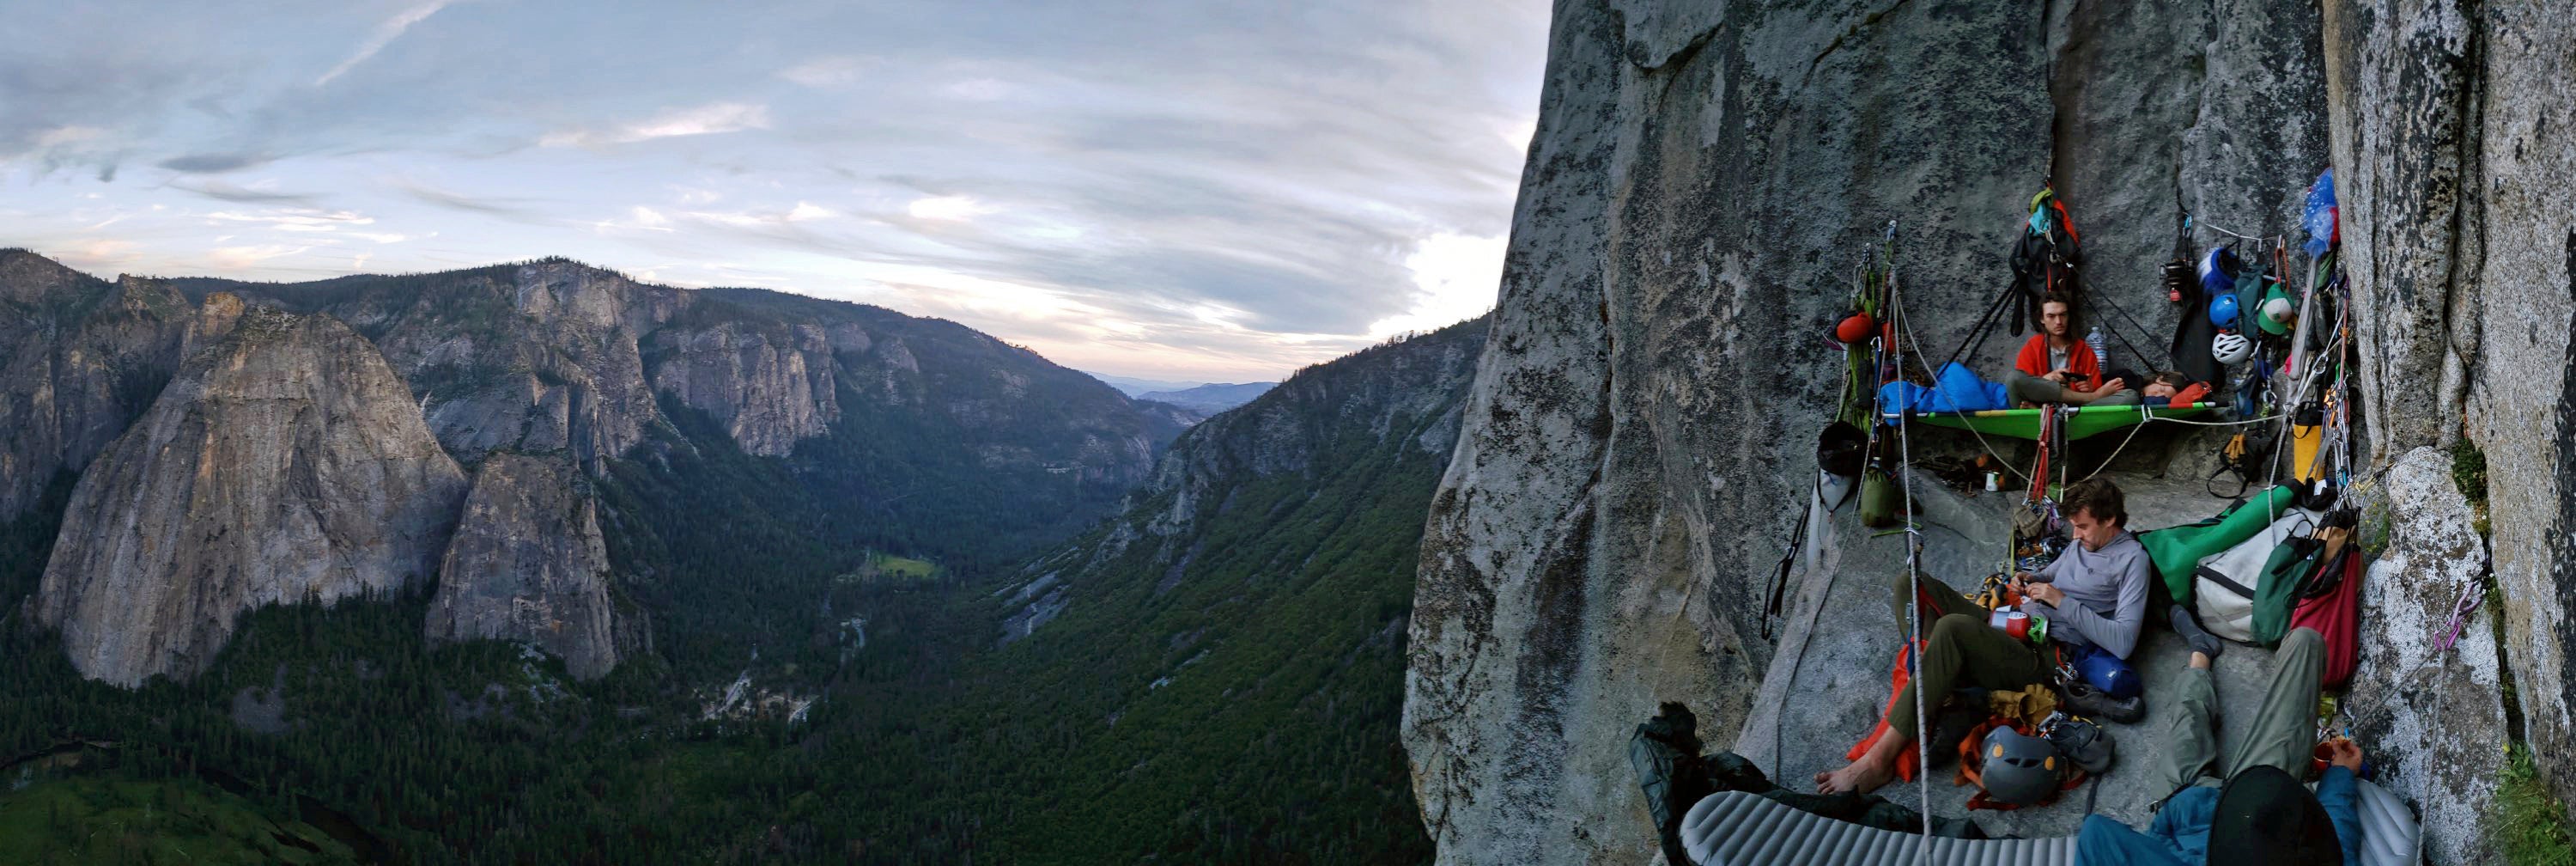 Yosemite Climbing Permits